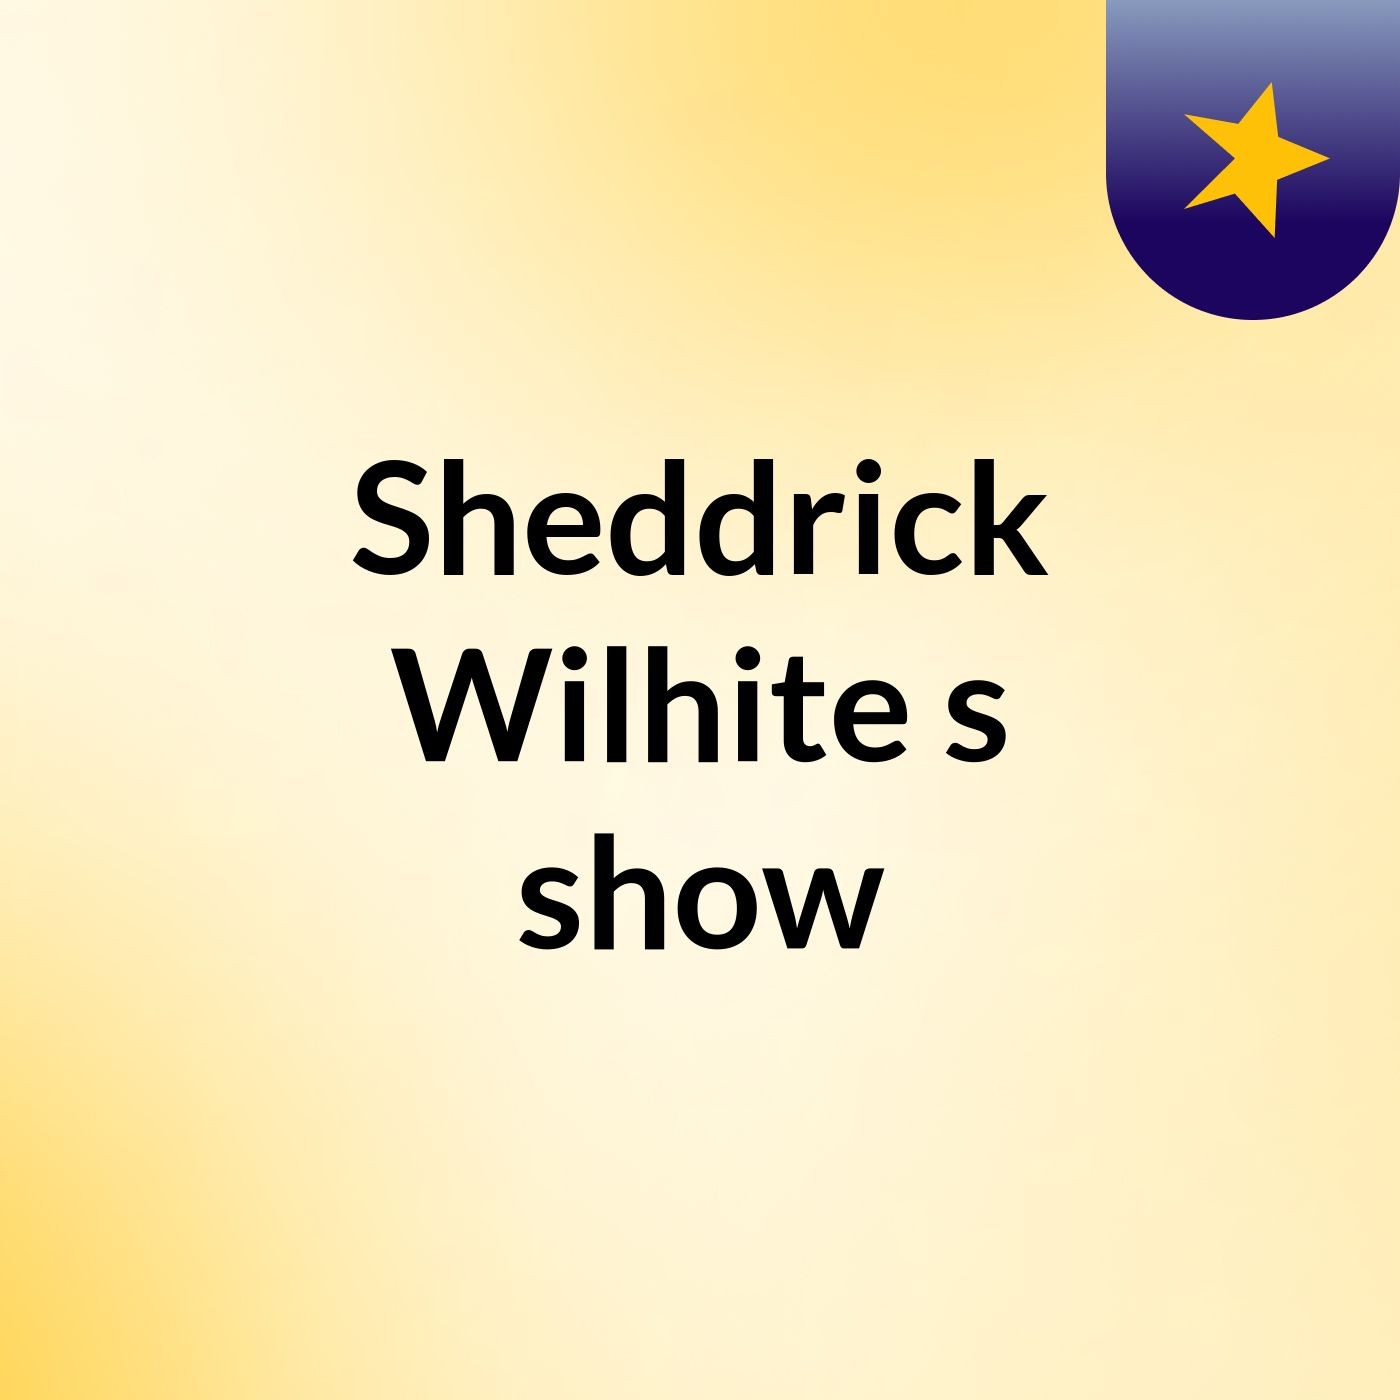 Sheddrick Wilhite's show